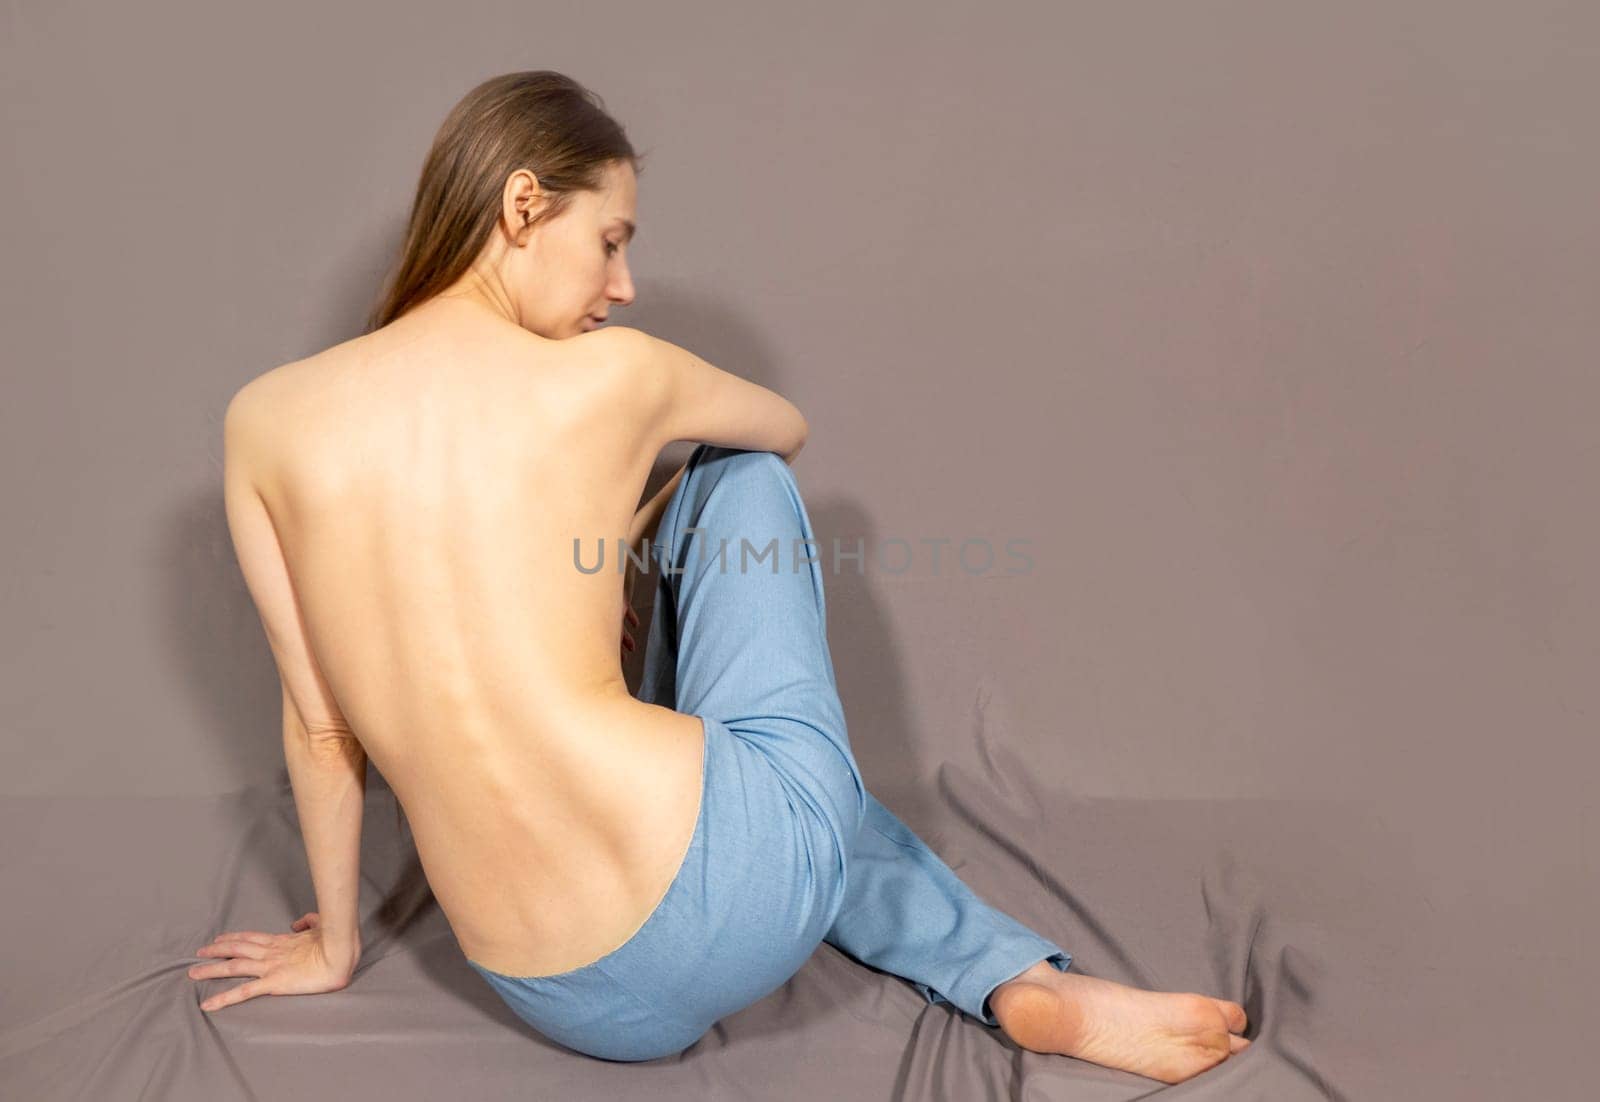 The beautiful woman's body on gray background by kajasja